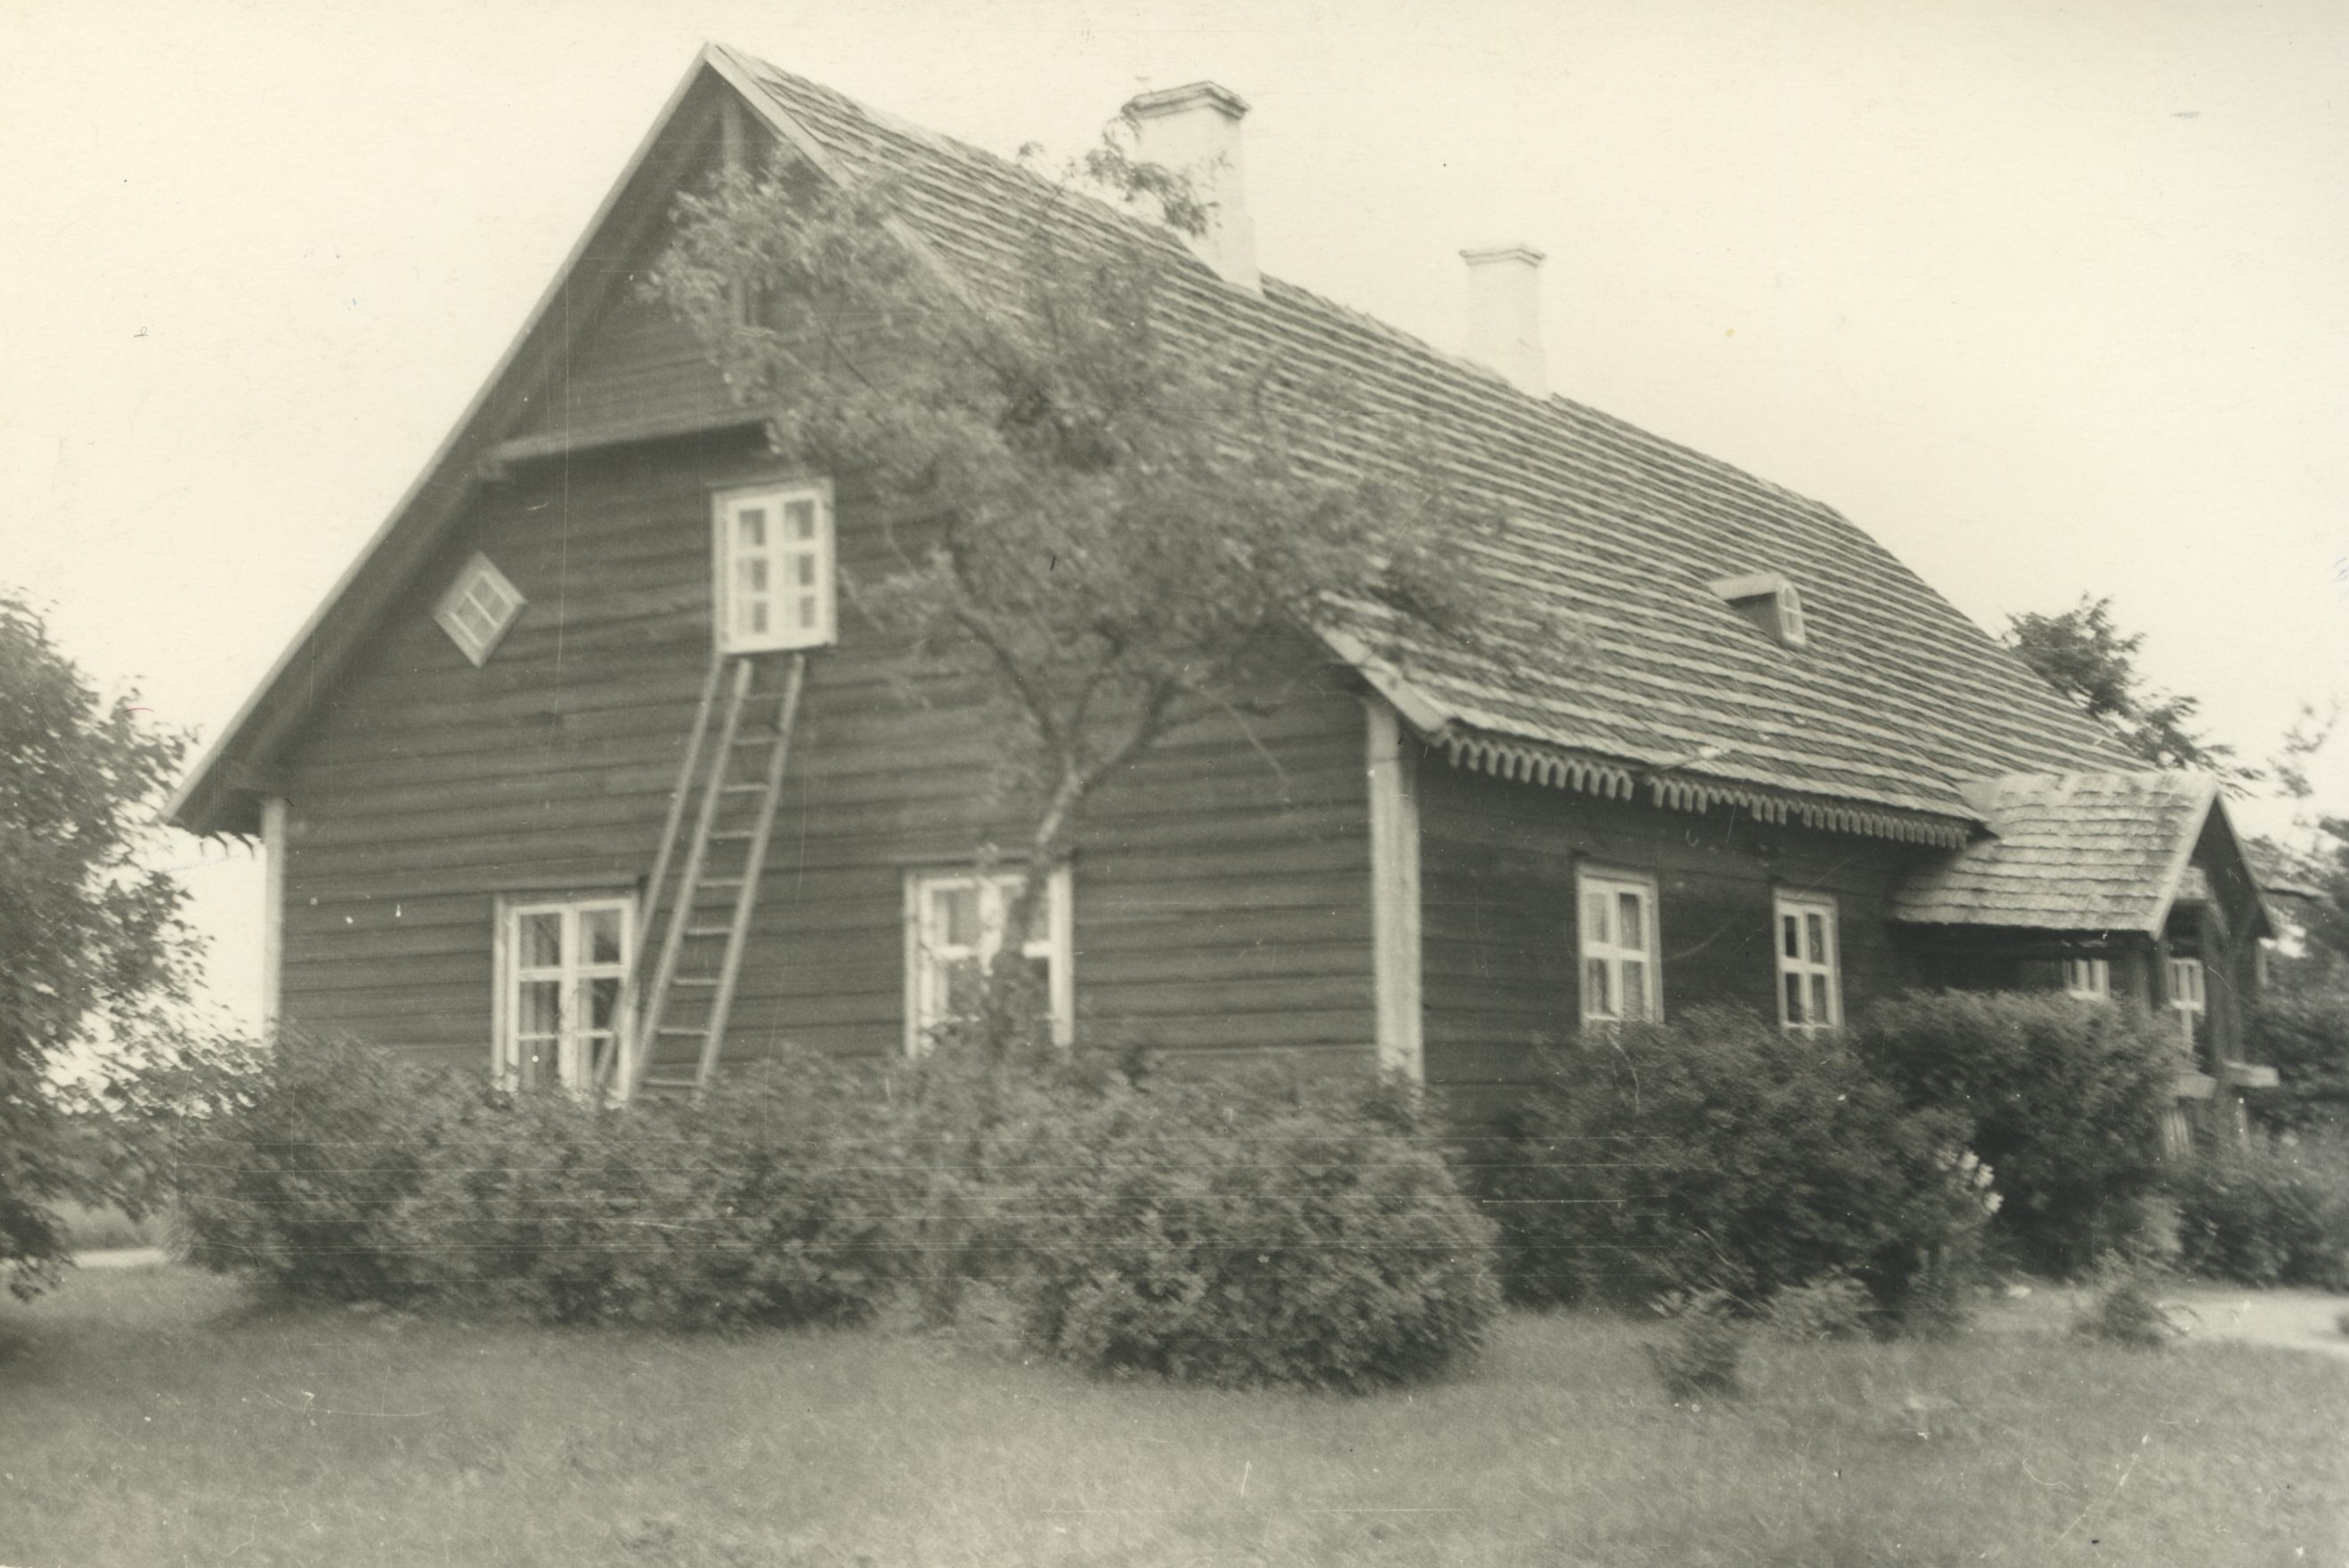 (a. Kitzberg) Pöögle Maie schoolhouse